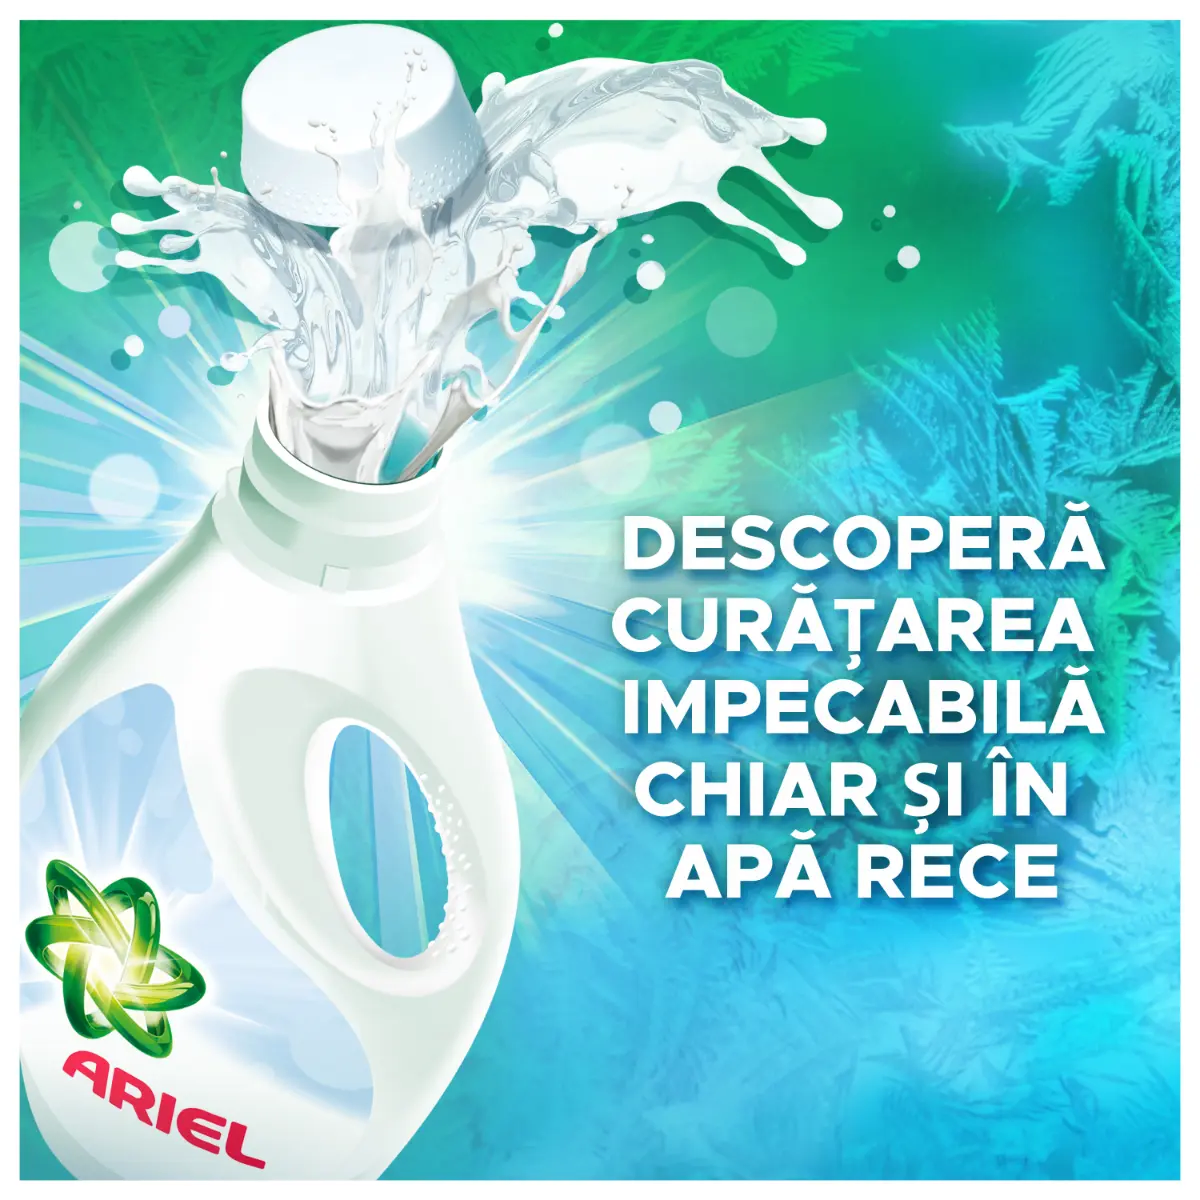 Detergent de rufe lichid Ariel Sensitive Skin, 20 spalari, 1L